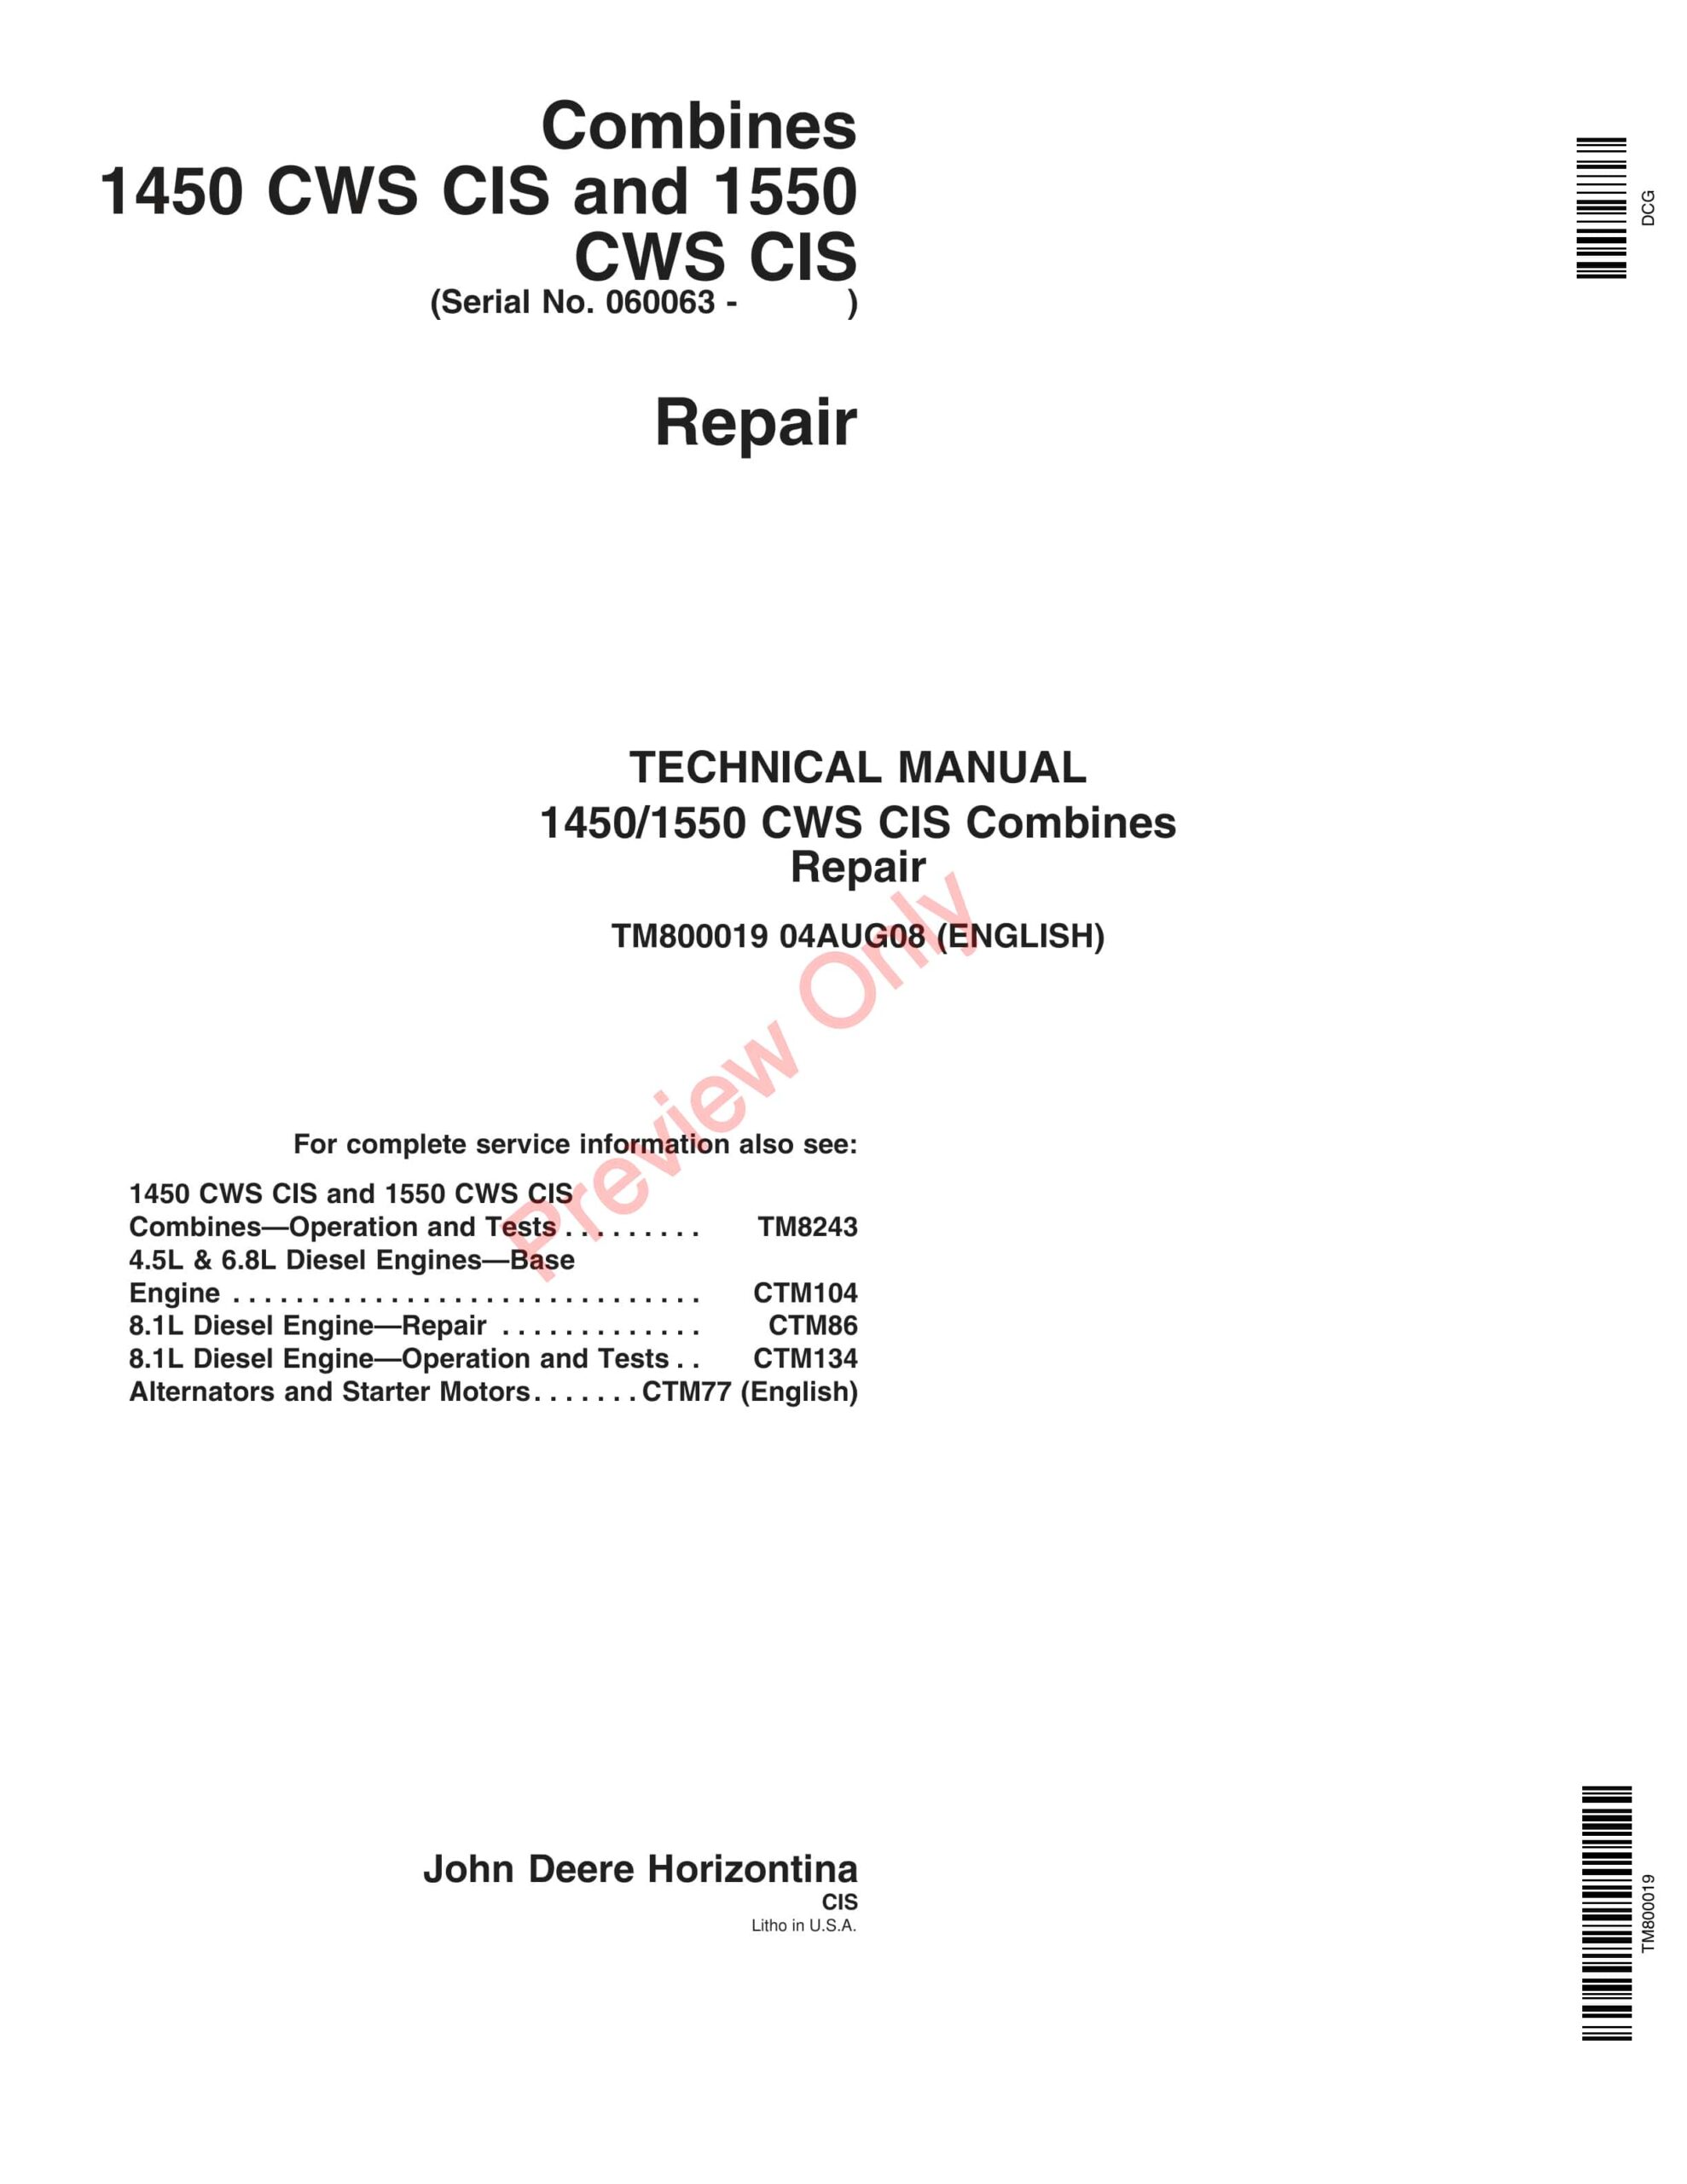 John Deere Combines – 1450 CWS CIS and 1550 CWS CIS Technical Manual TM800019 04AUG08-1